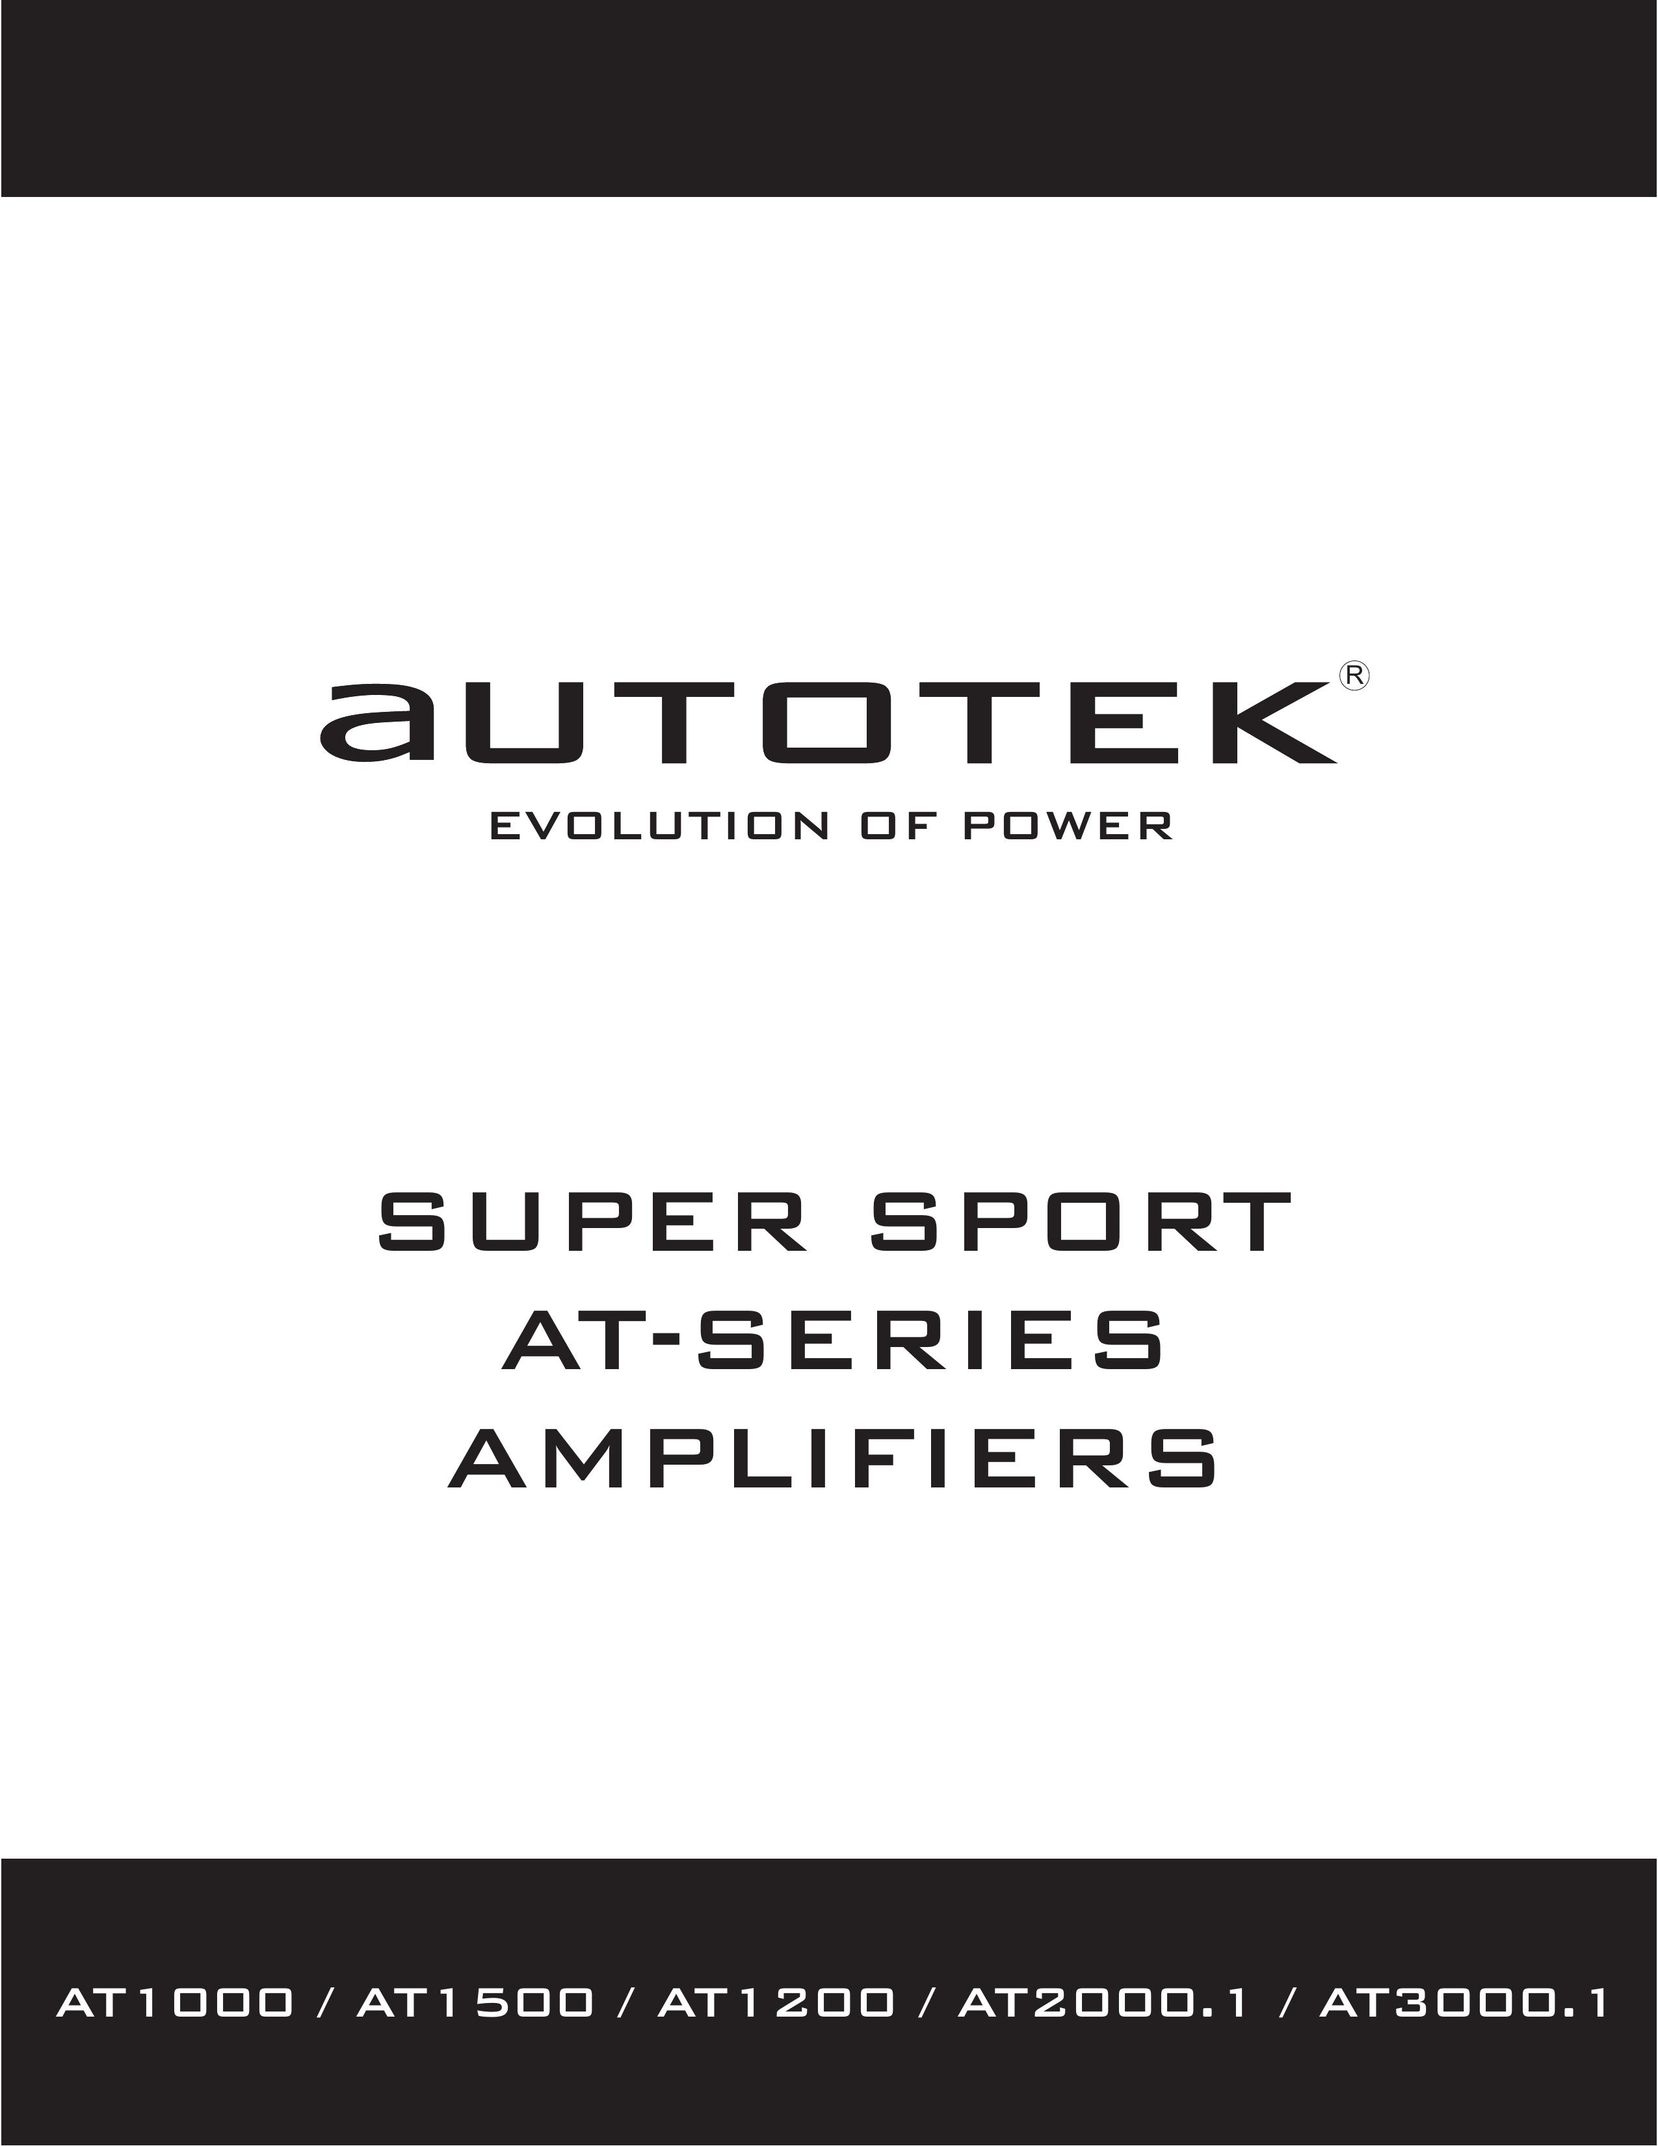 AutoTek AT2000.1 Stereo Amplifier User Manual